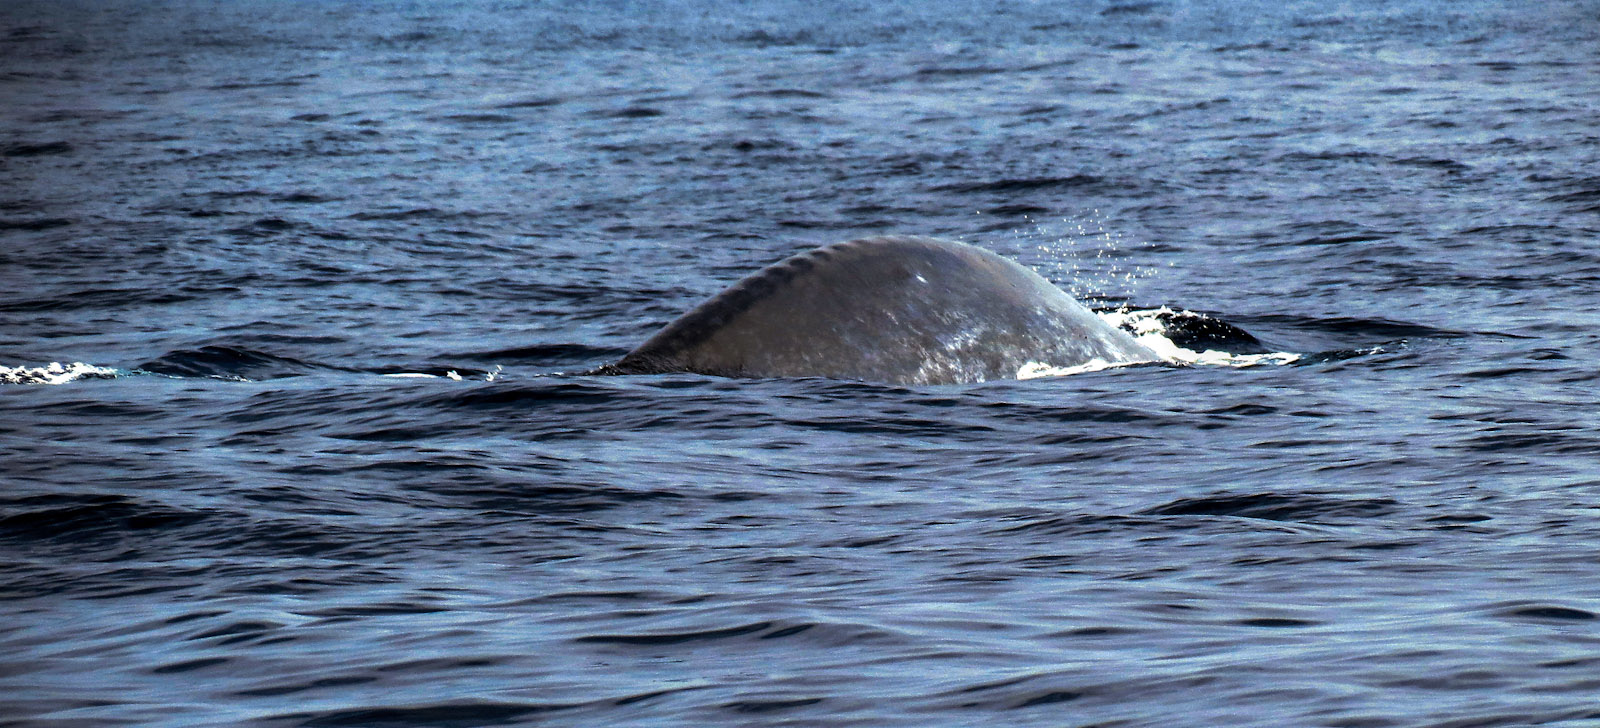 backbone-of-whale-mirissa